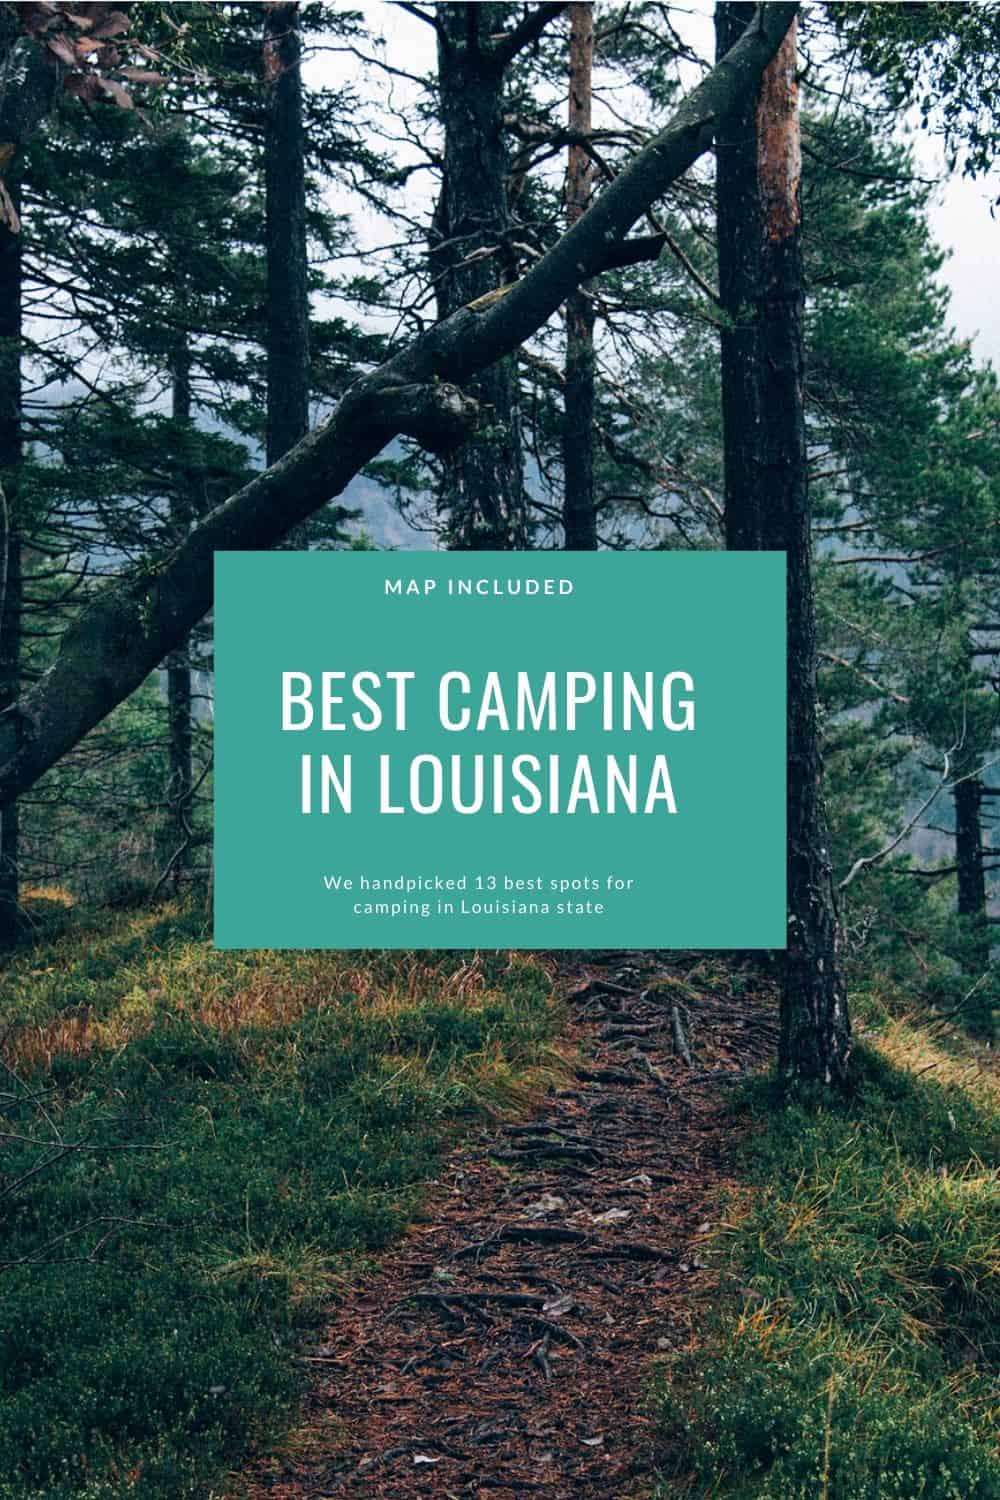 Bet Camping Spots in Louisiana